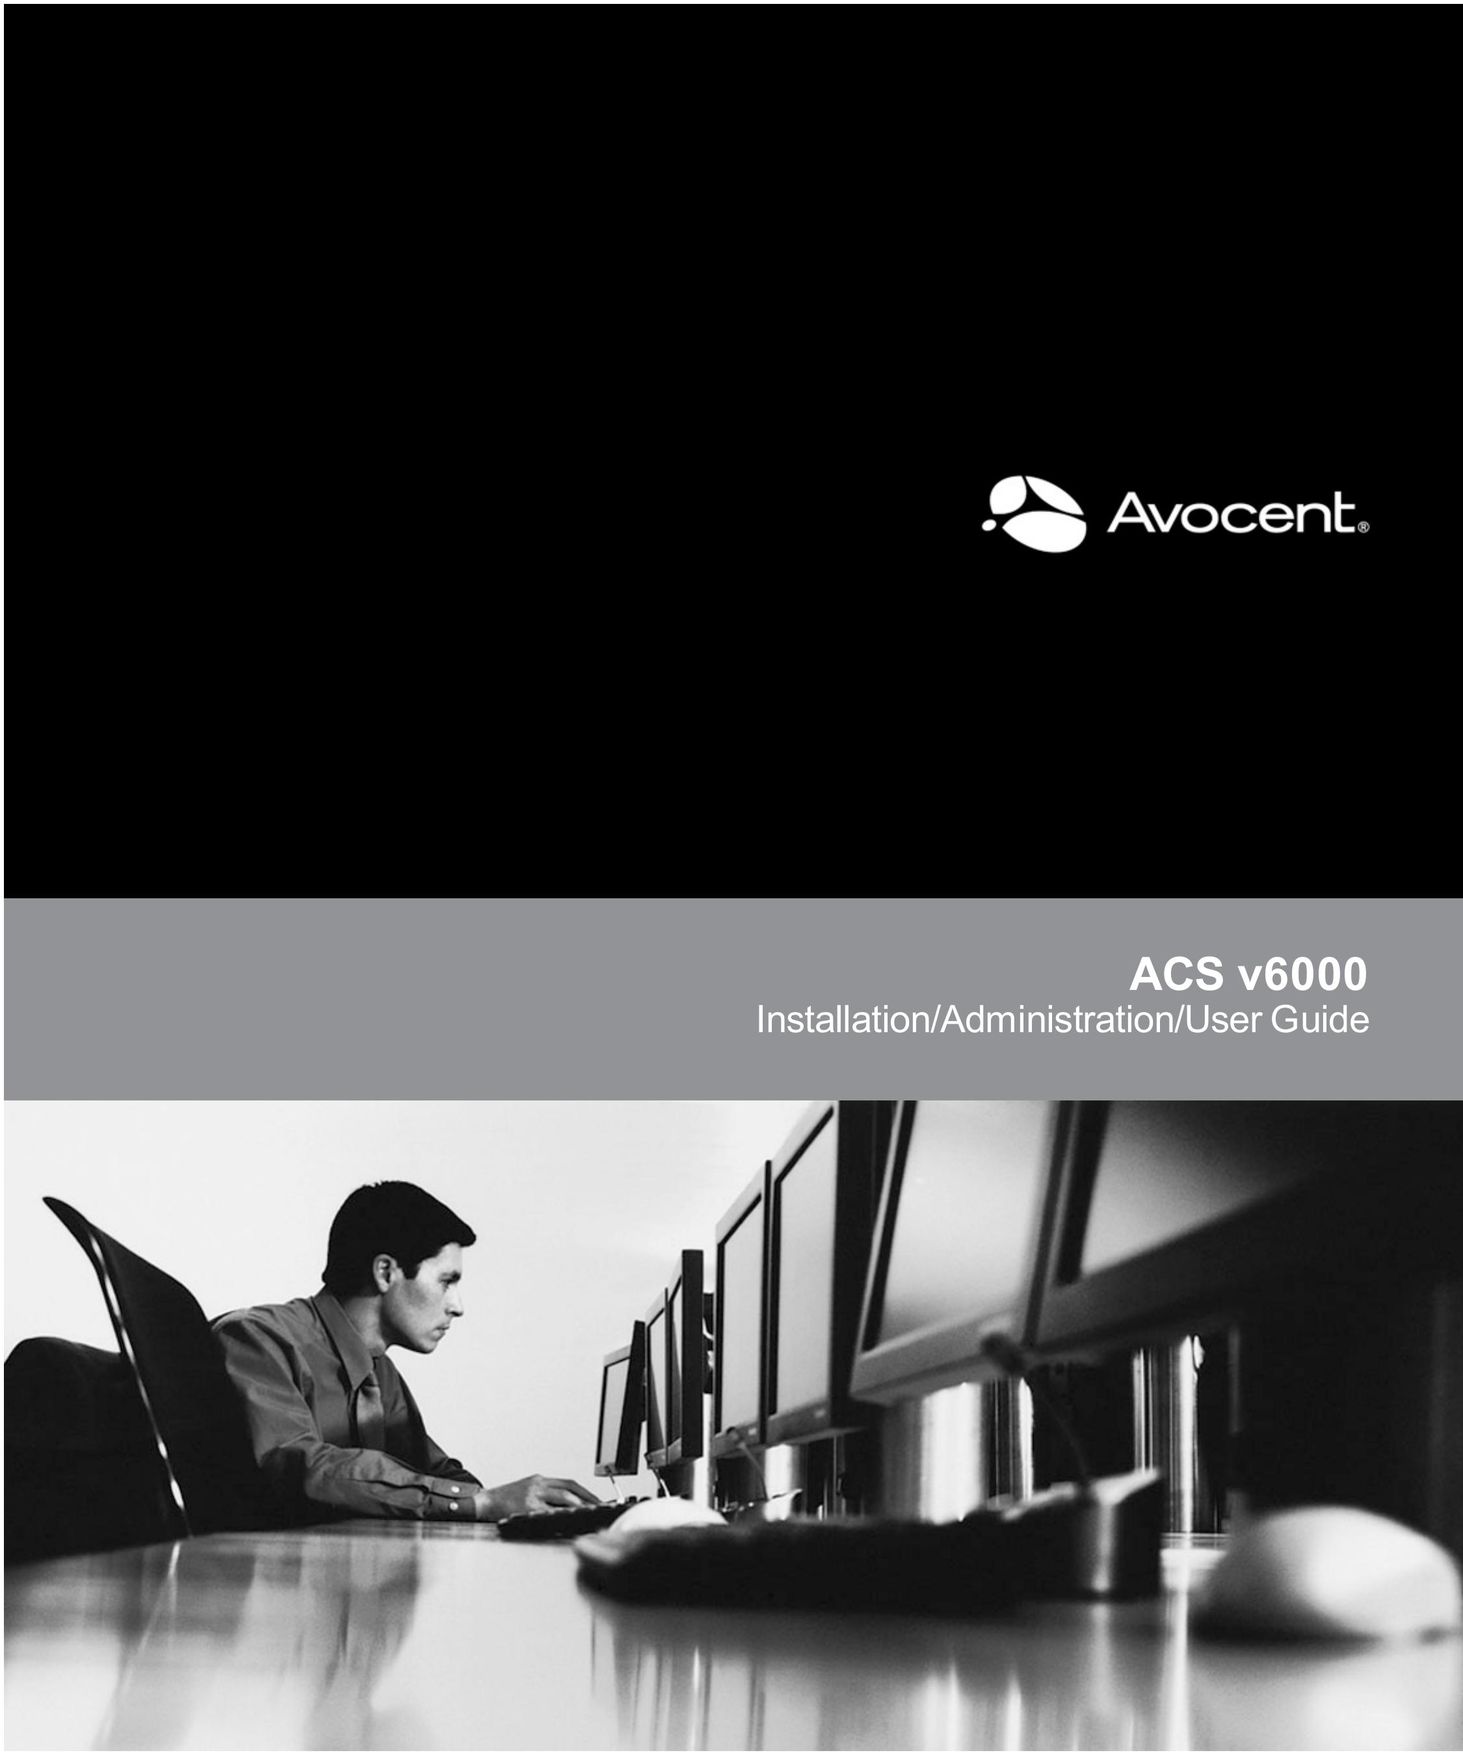 Casio ACS V6000 Personal Computer User Manual